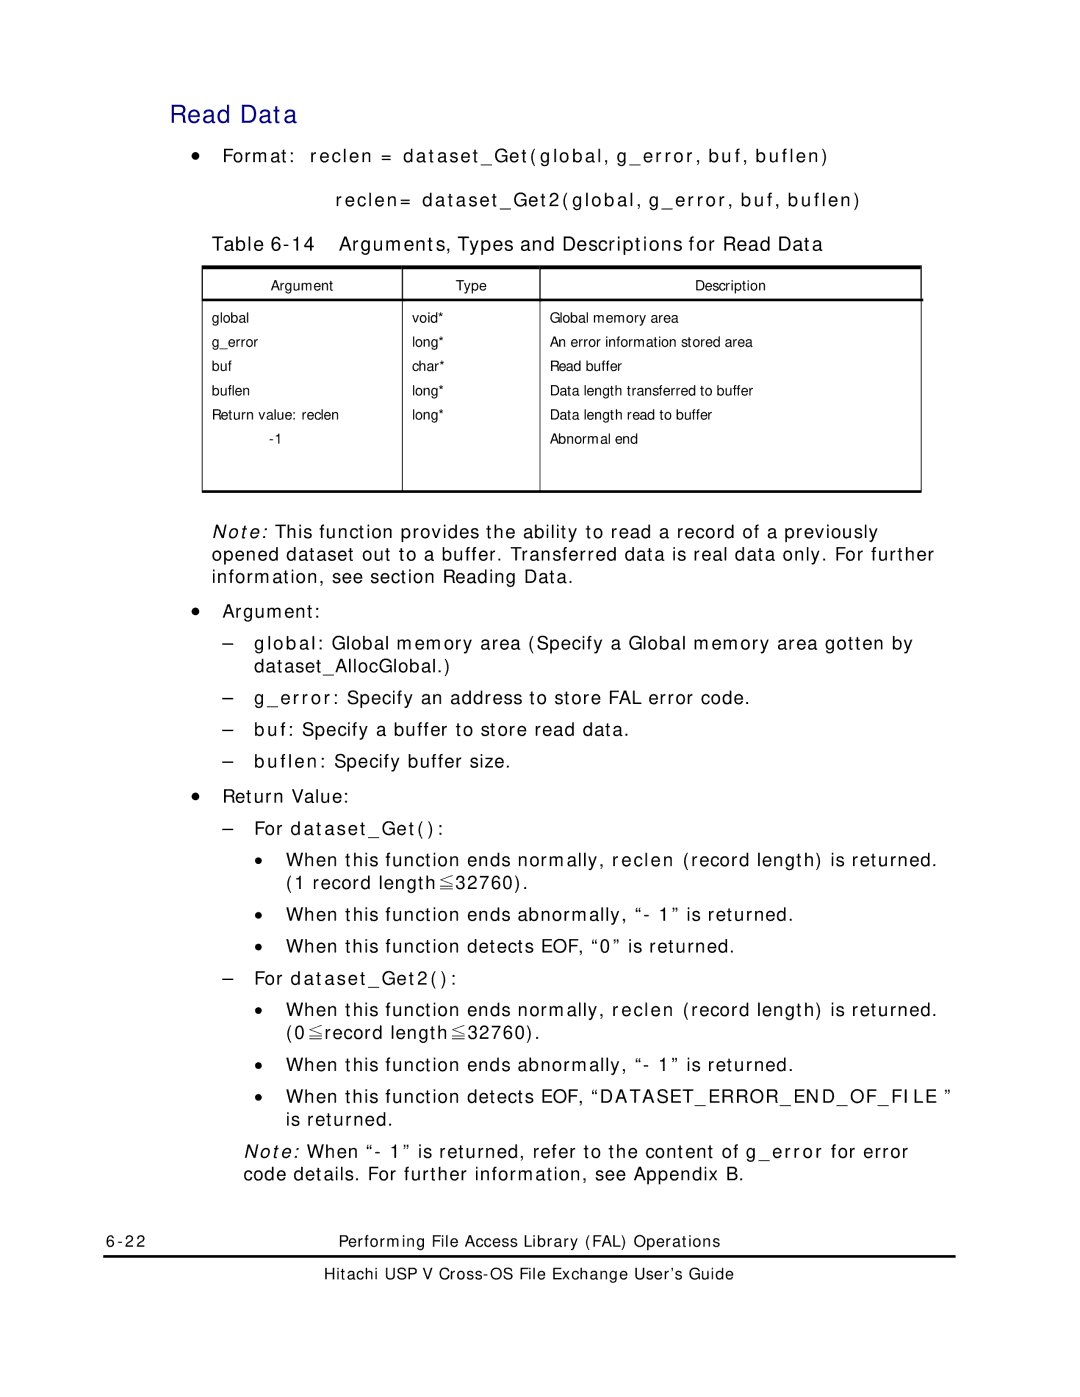 Hitachi MK-96RD647-01 manual Arguments, Types and Descriptions for Read Data, For datasetGet2 